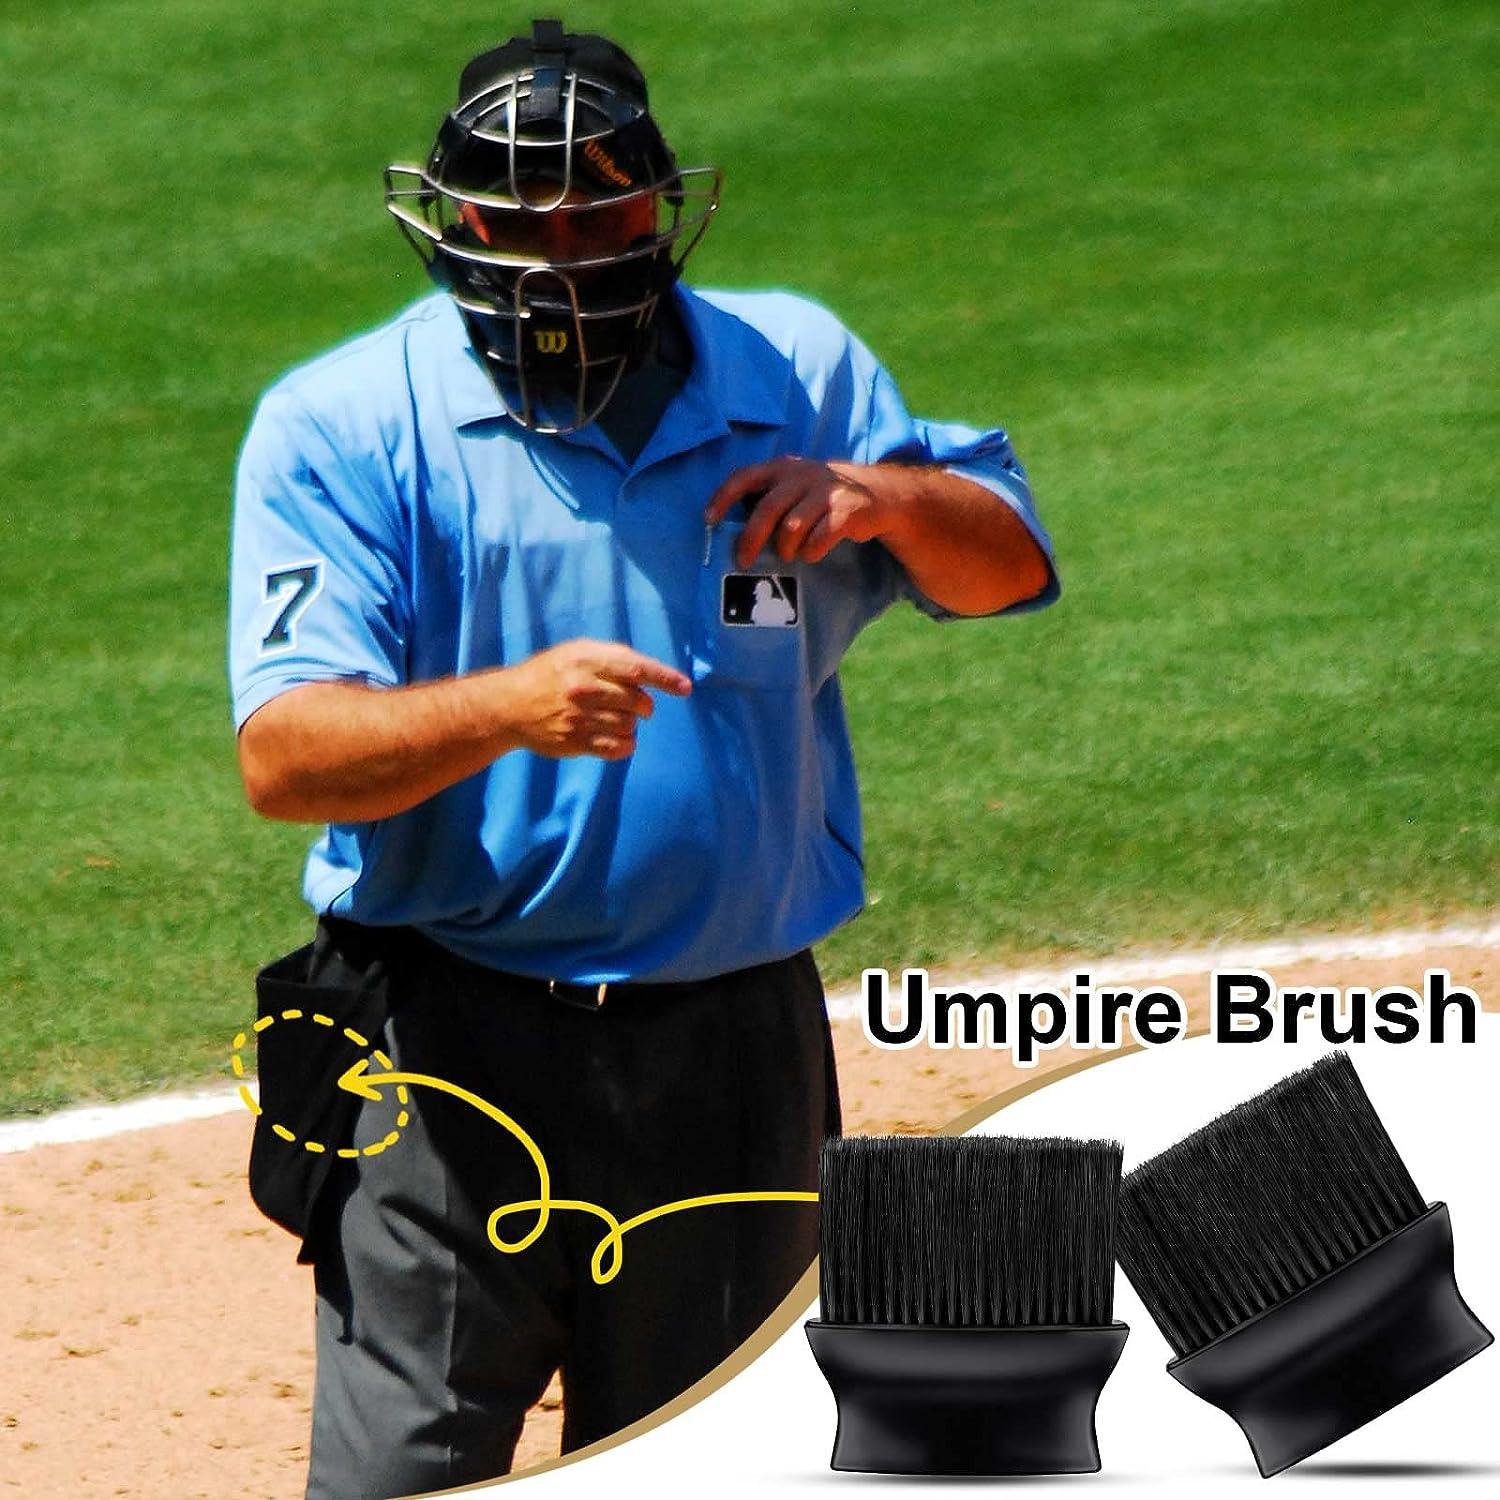  Deekin 2 Pieces Umpire Brush Baseball Home Plate Brush Baseball  Umpire Gear with Plastic Handle for Baseball Softball Referee Equipment,  Black, 5 x 4.7 x 1.4 Inch : Sports & Outdoors